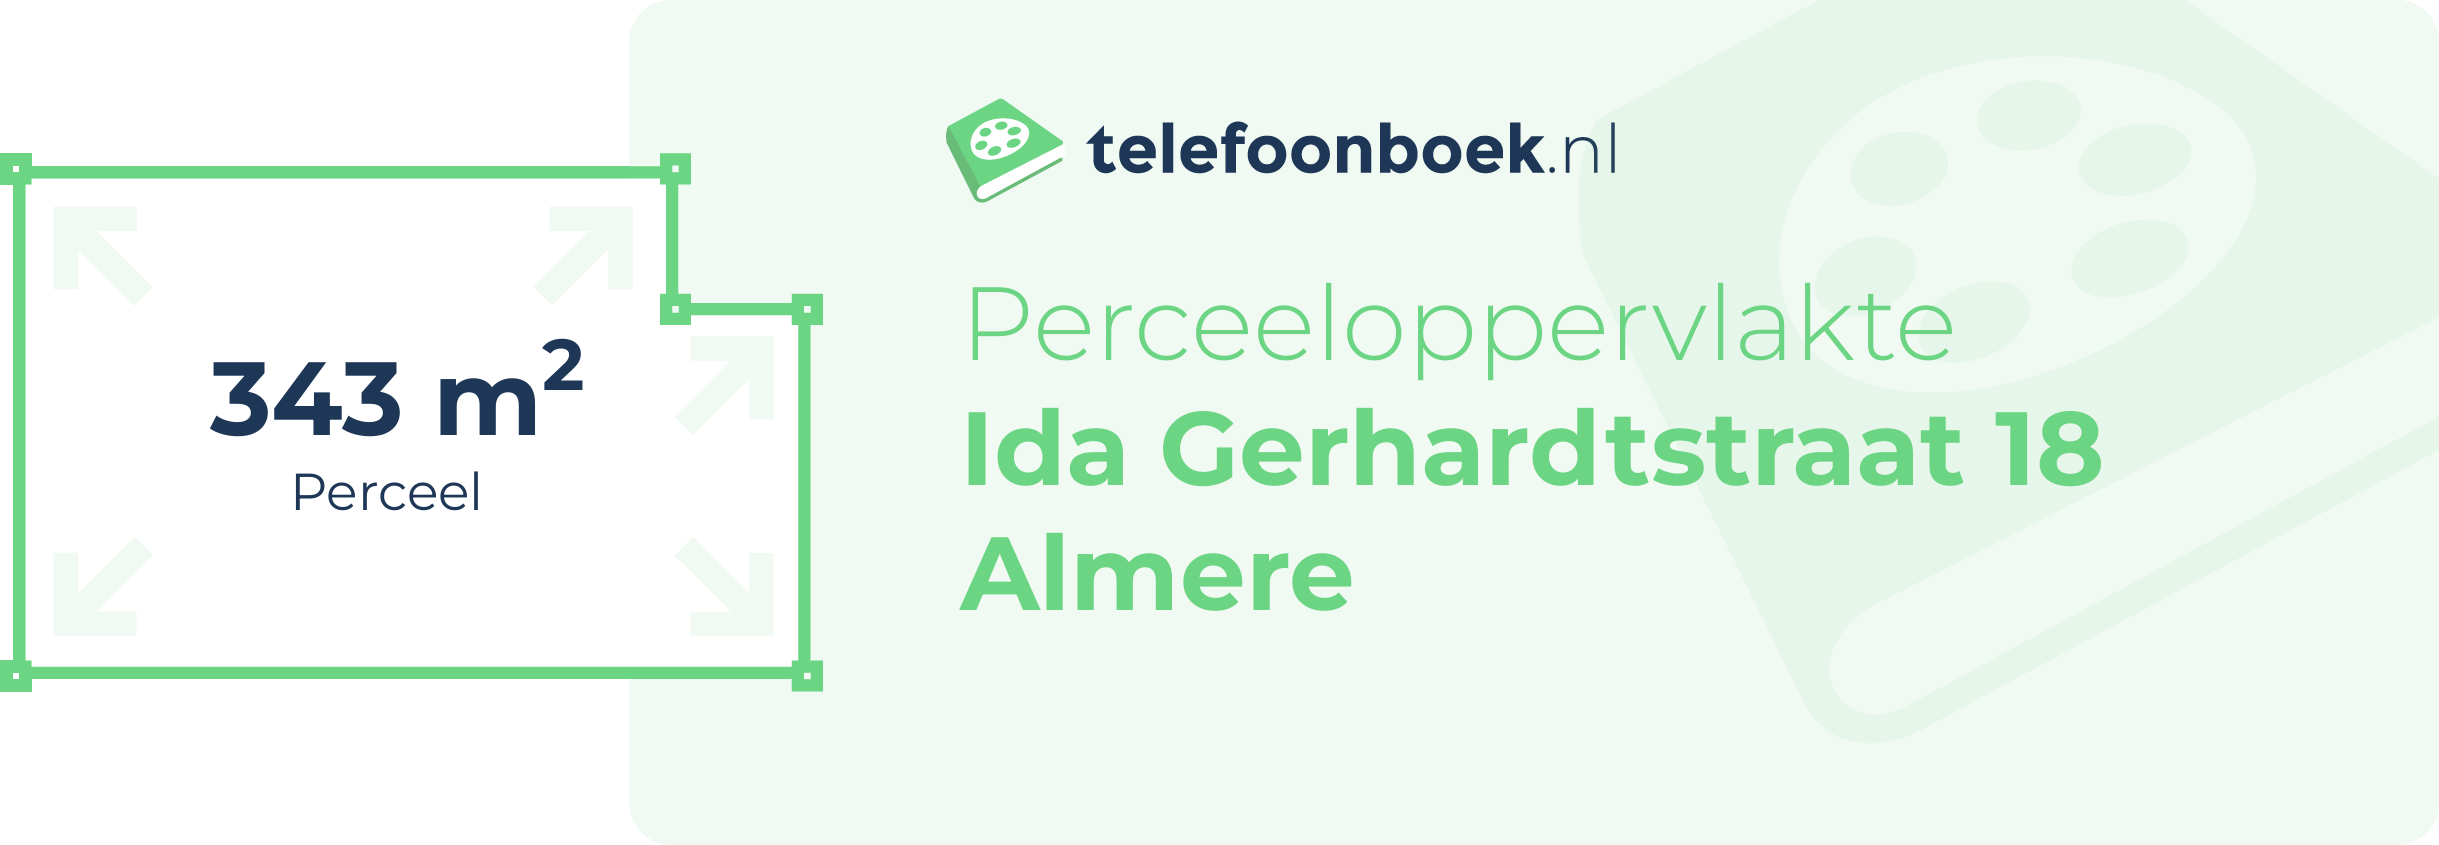 Perceeloppervlakte Ida Gerhardtstraat 18 Almere